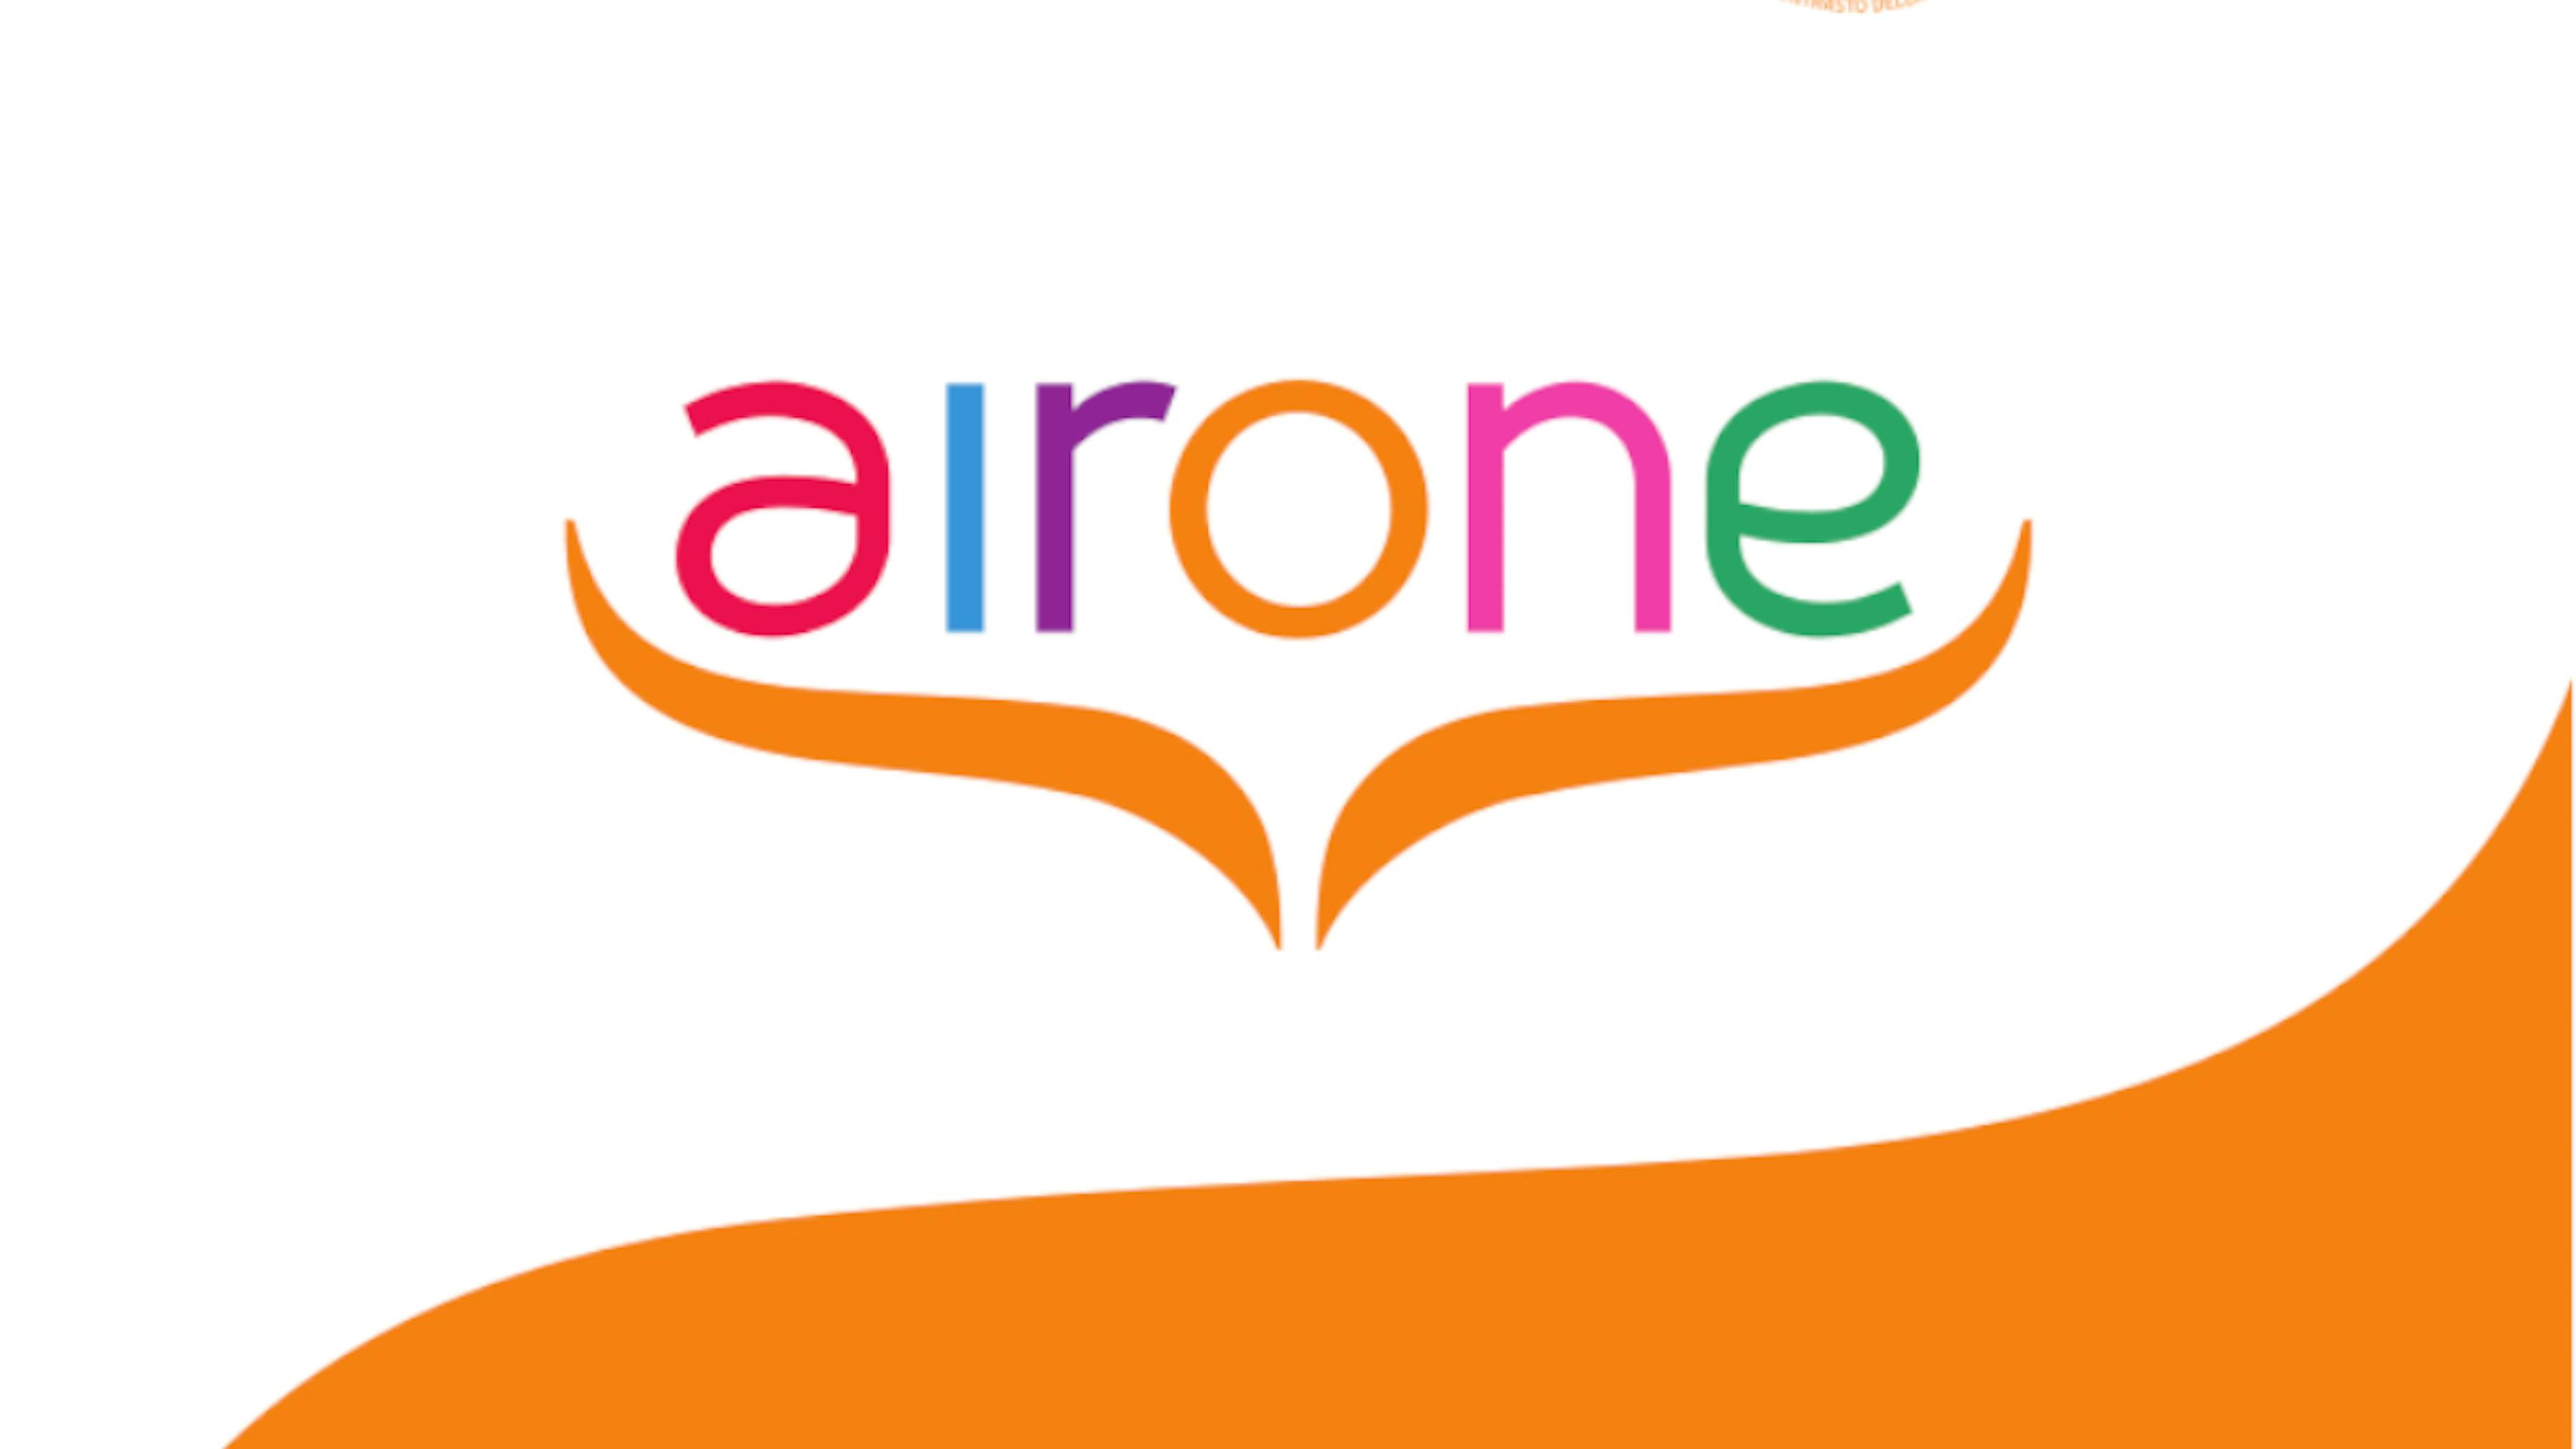 Logo Airone